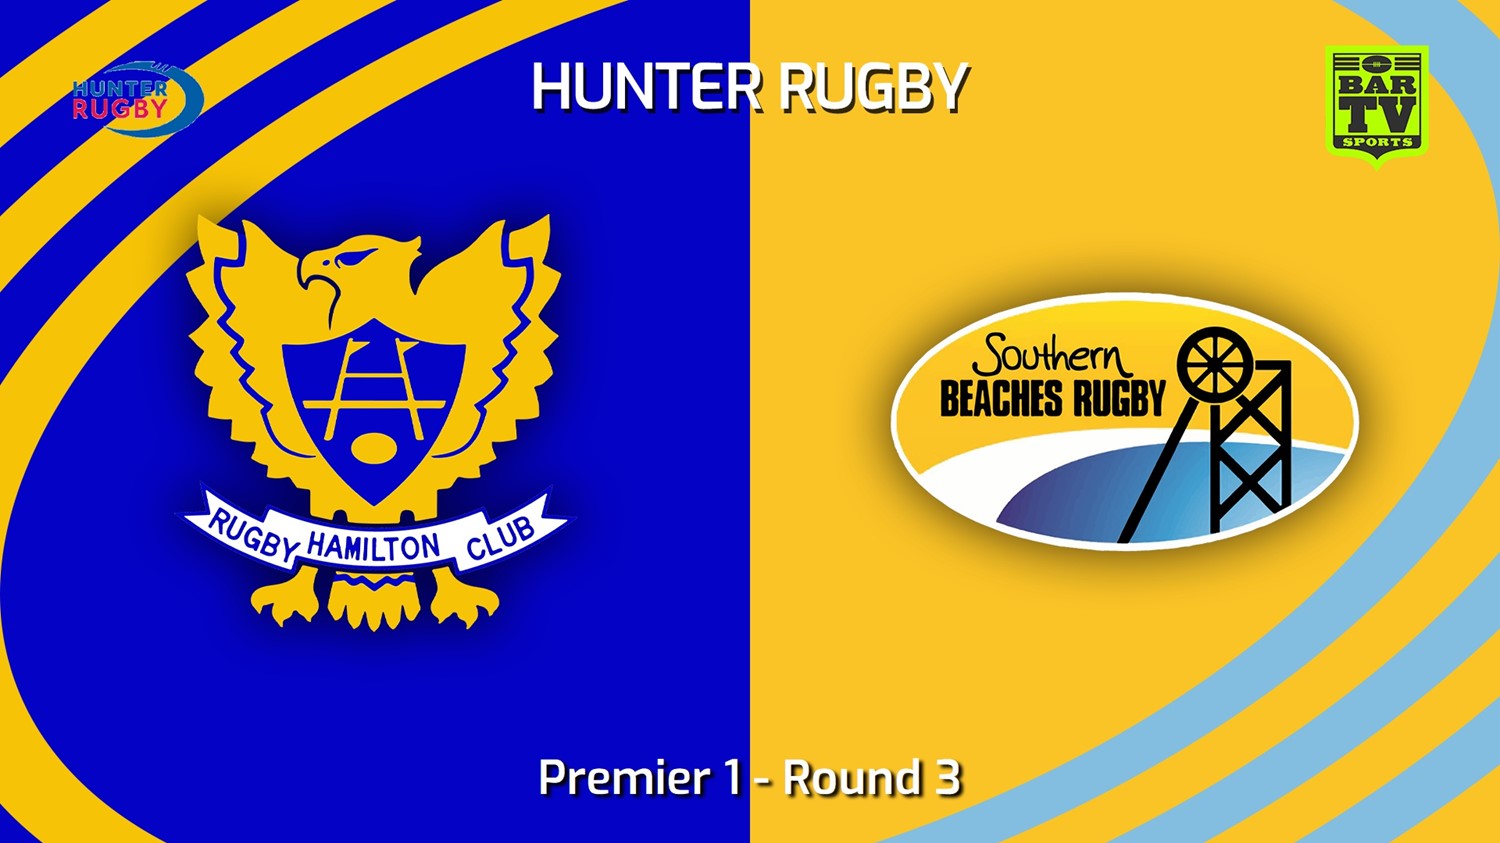 230429-Hunter Rugby Round 3 - Premier 1 - Hamilton Hawks v Southern Beaches Minigame Slate Image